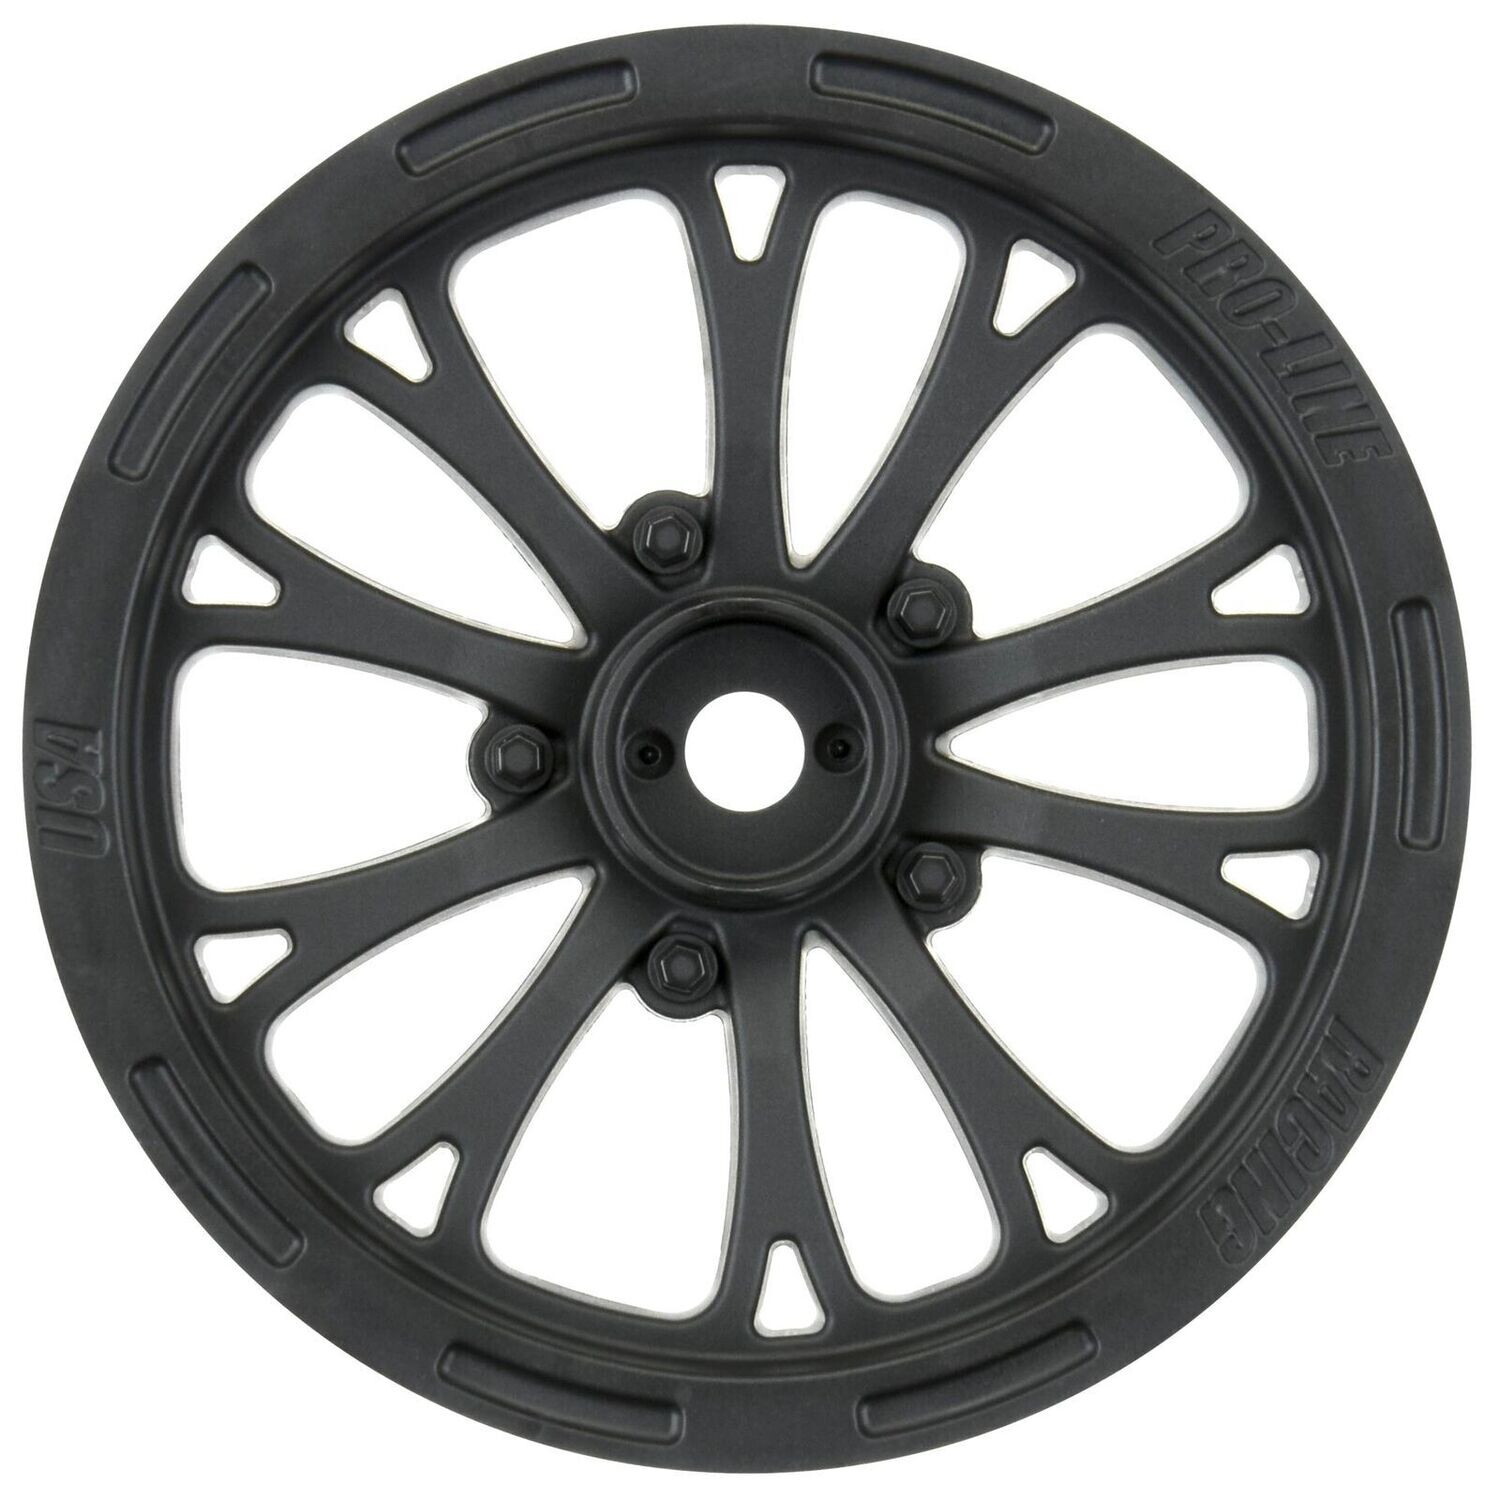 1/10 Pro-Line Pomona Drag Spec Front 2.2" 12mm Drag Wheels (2) Black